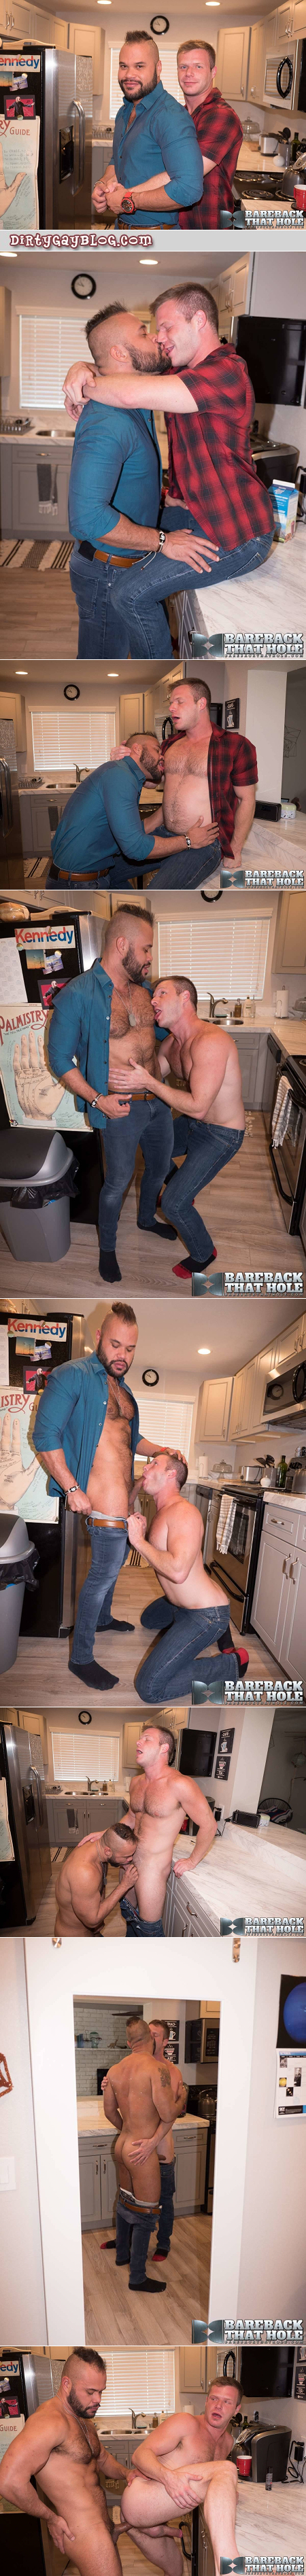 Beefy gay men having bareback sex in their kitchen.